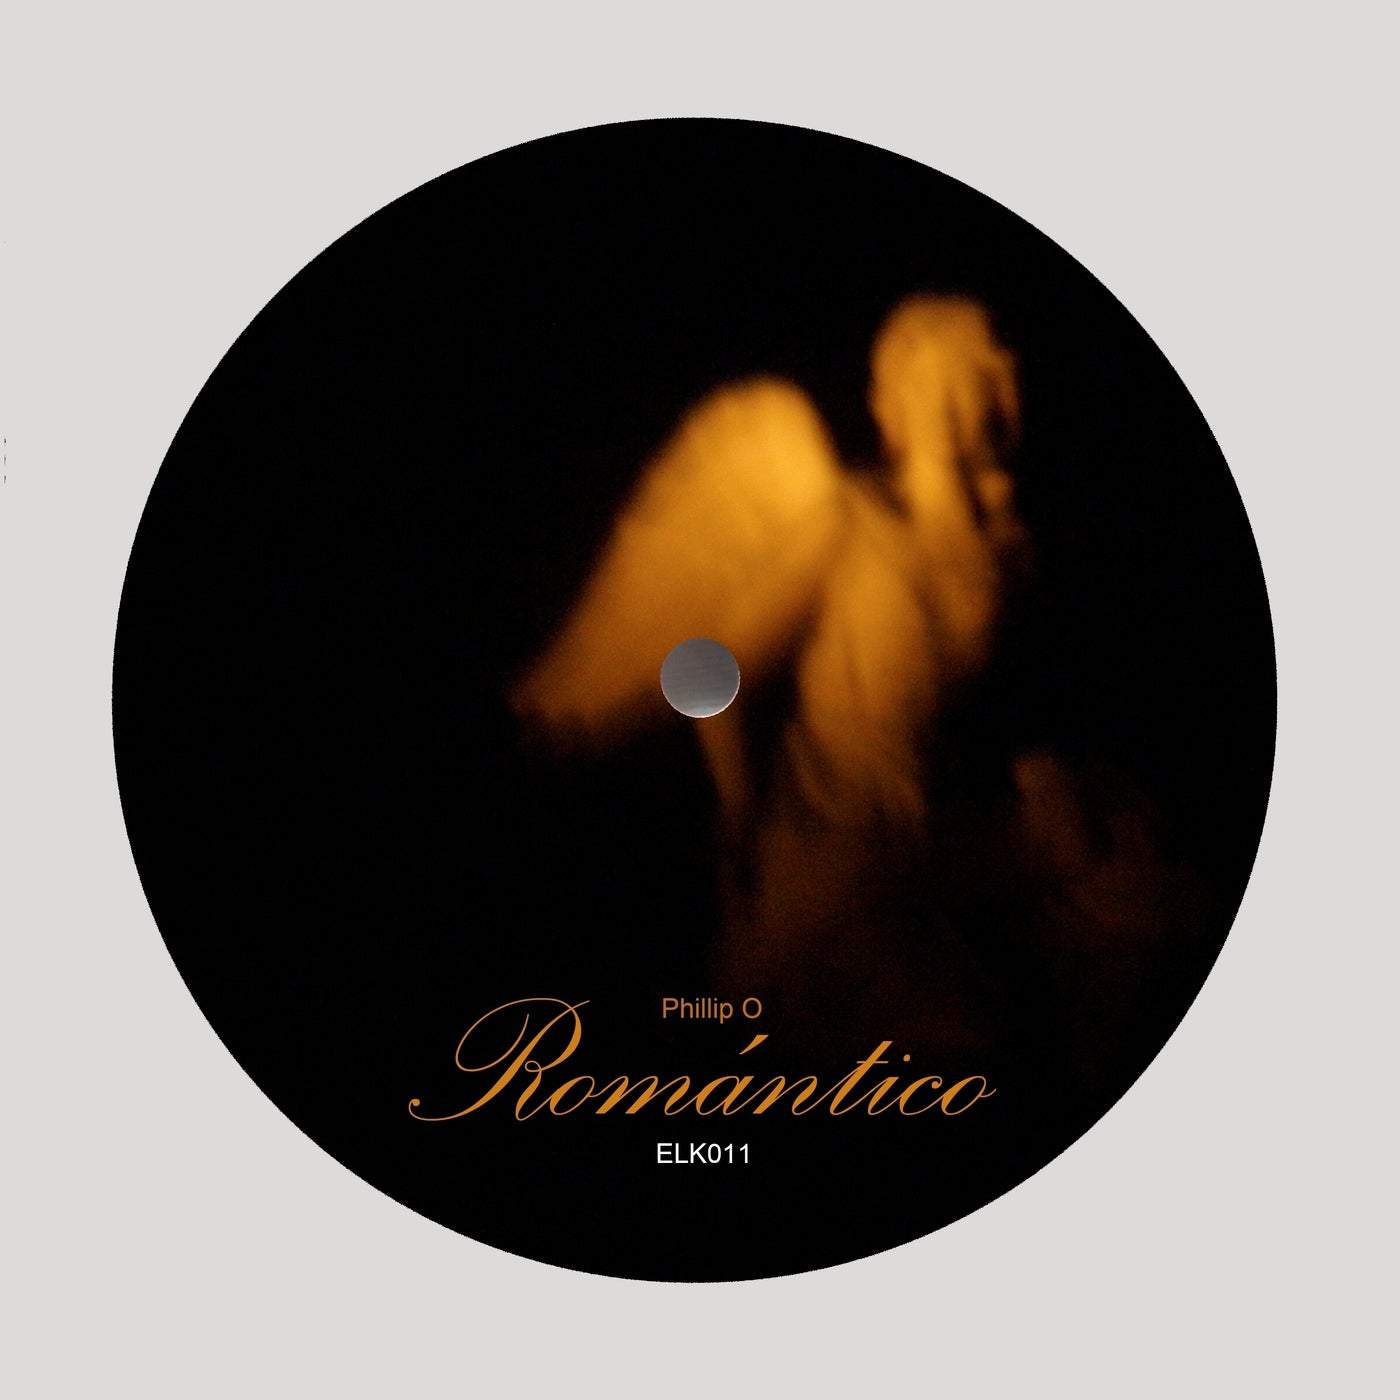 Download Phillip O, Solvi-Linn - Romantico on Electrobuzz